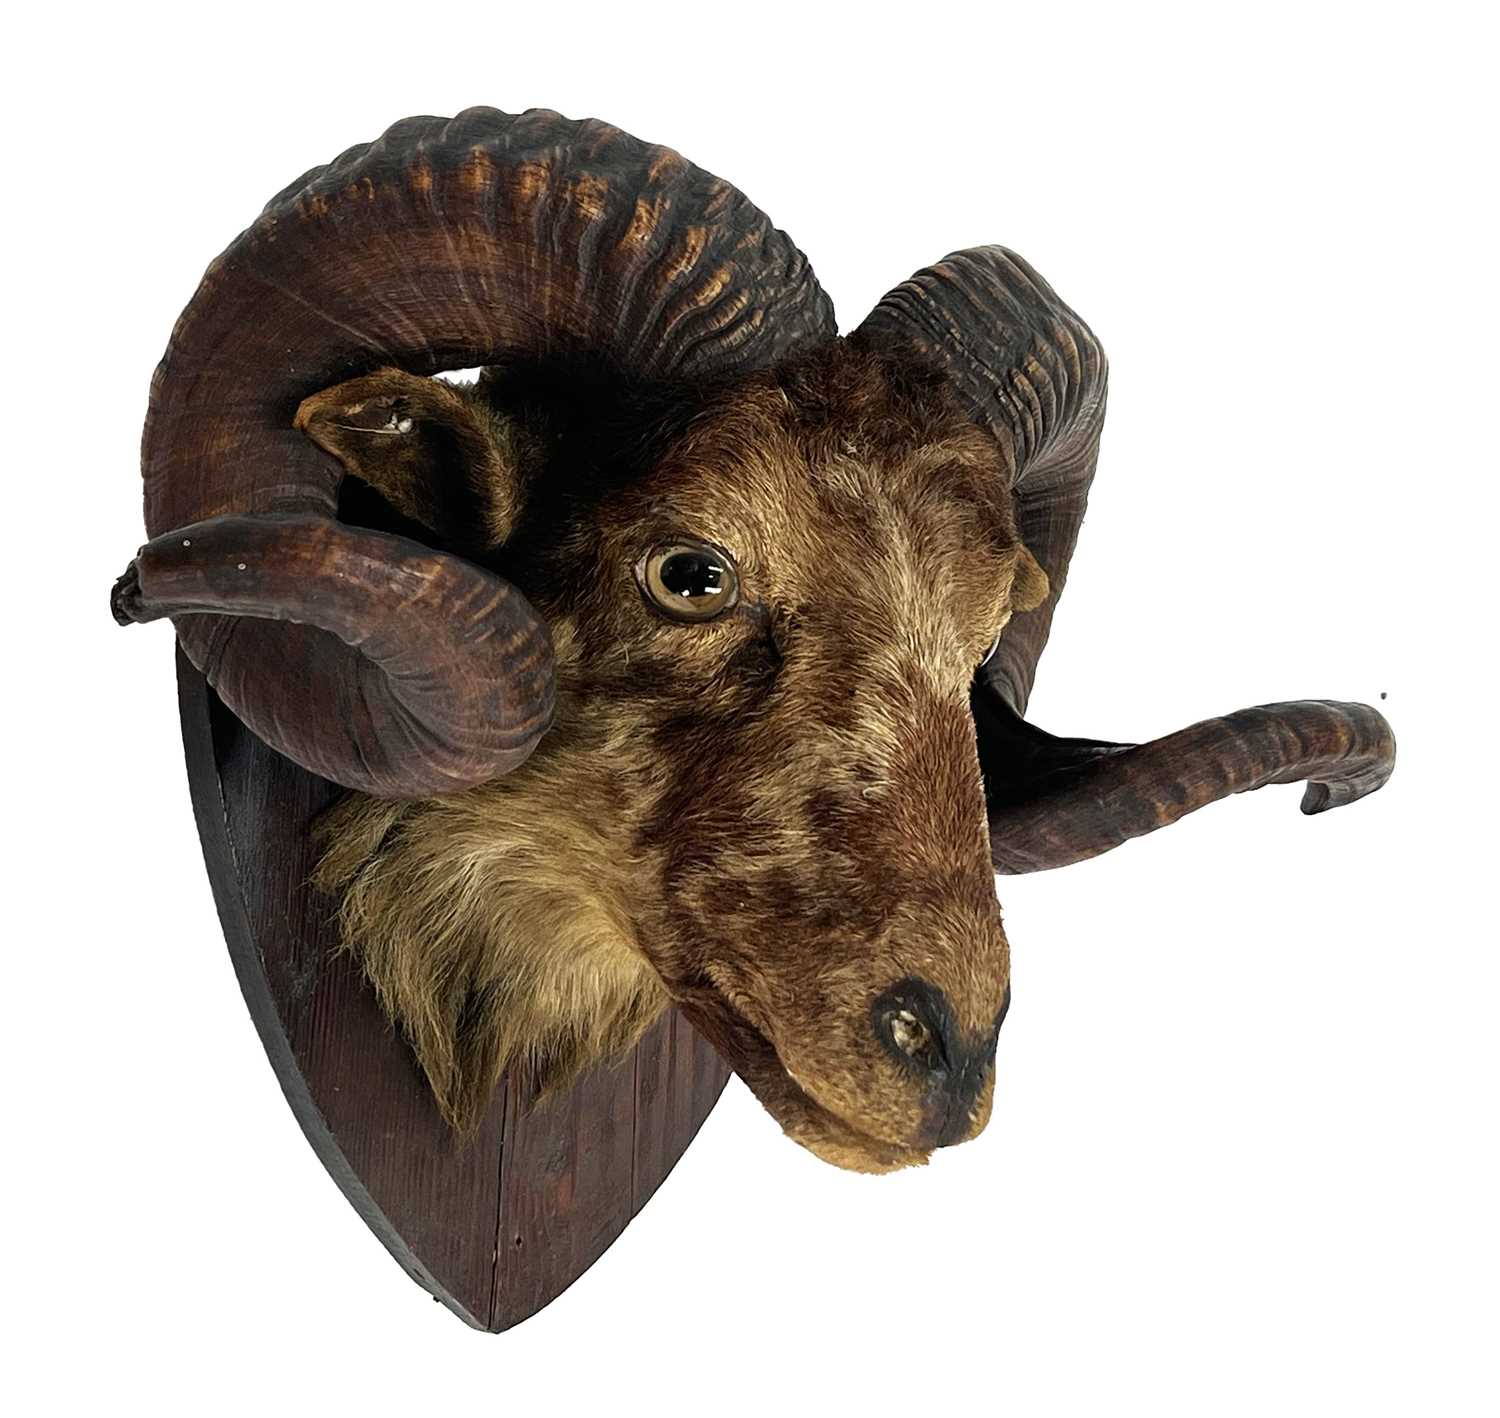 Taxidermy: A Late Victorian Sheep Head Mount (Ovis aries), circa 1880-1900, an adult rams head